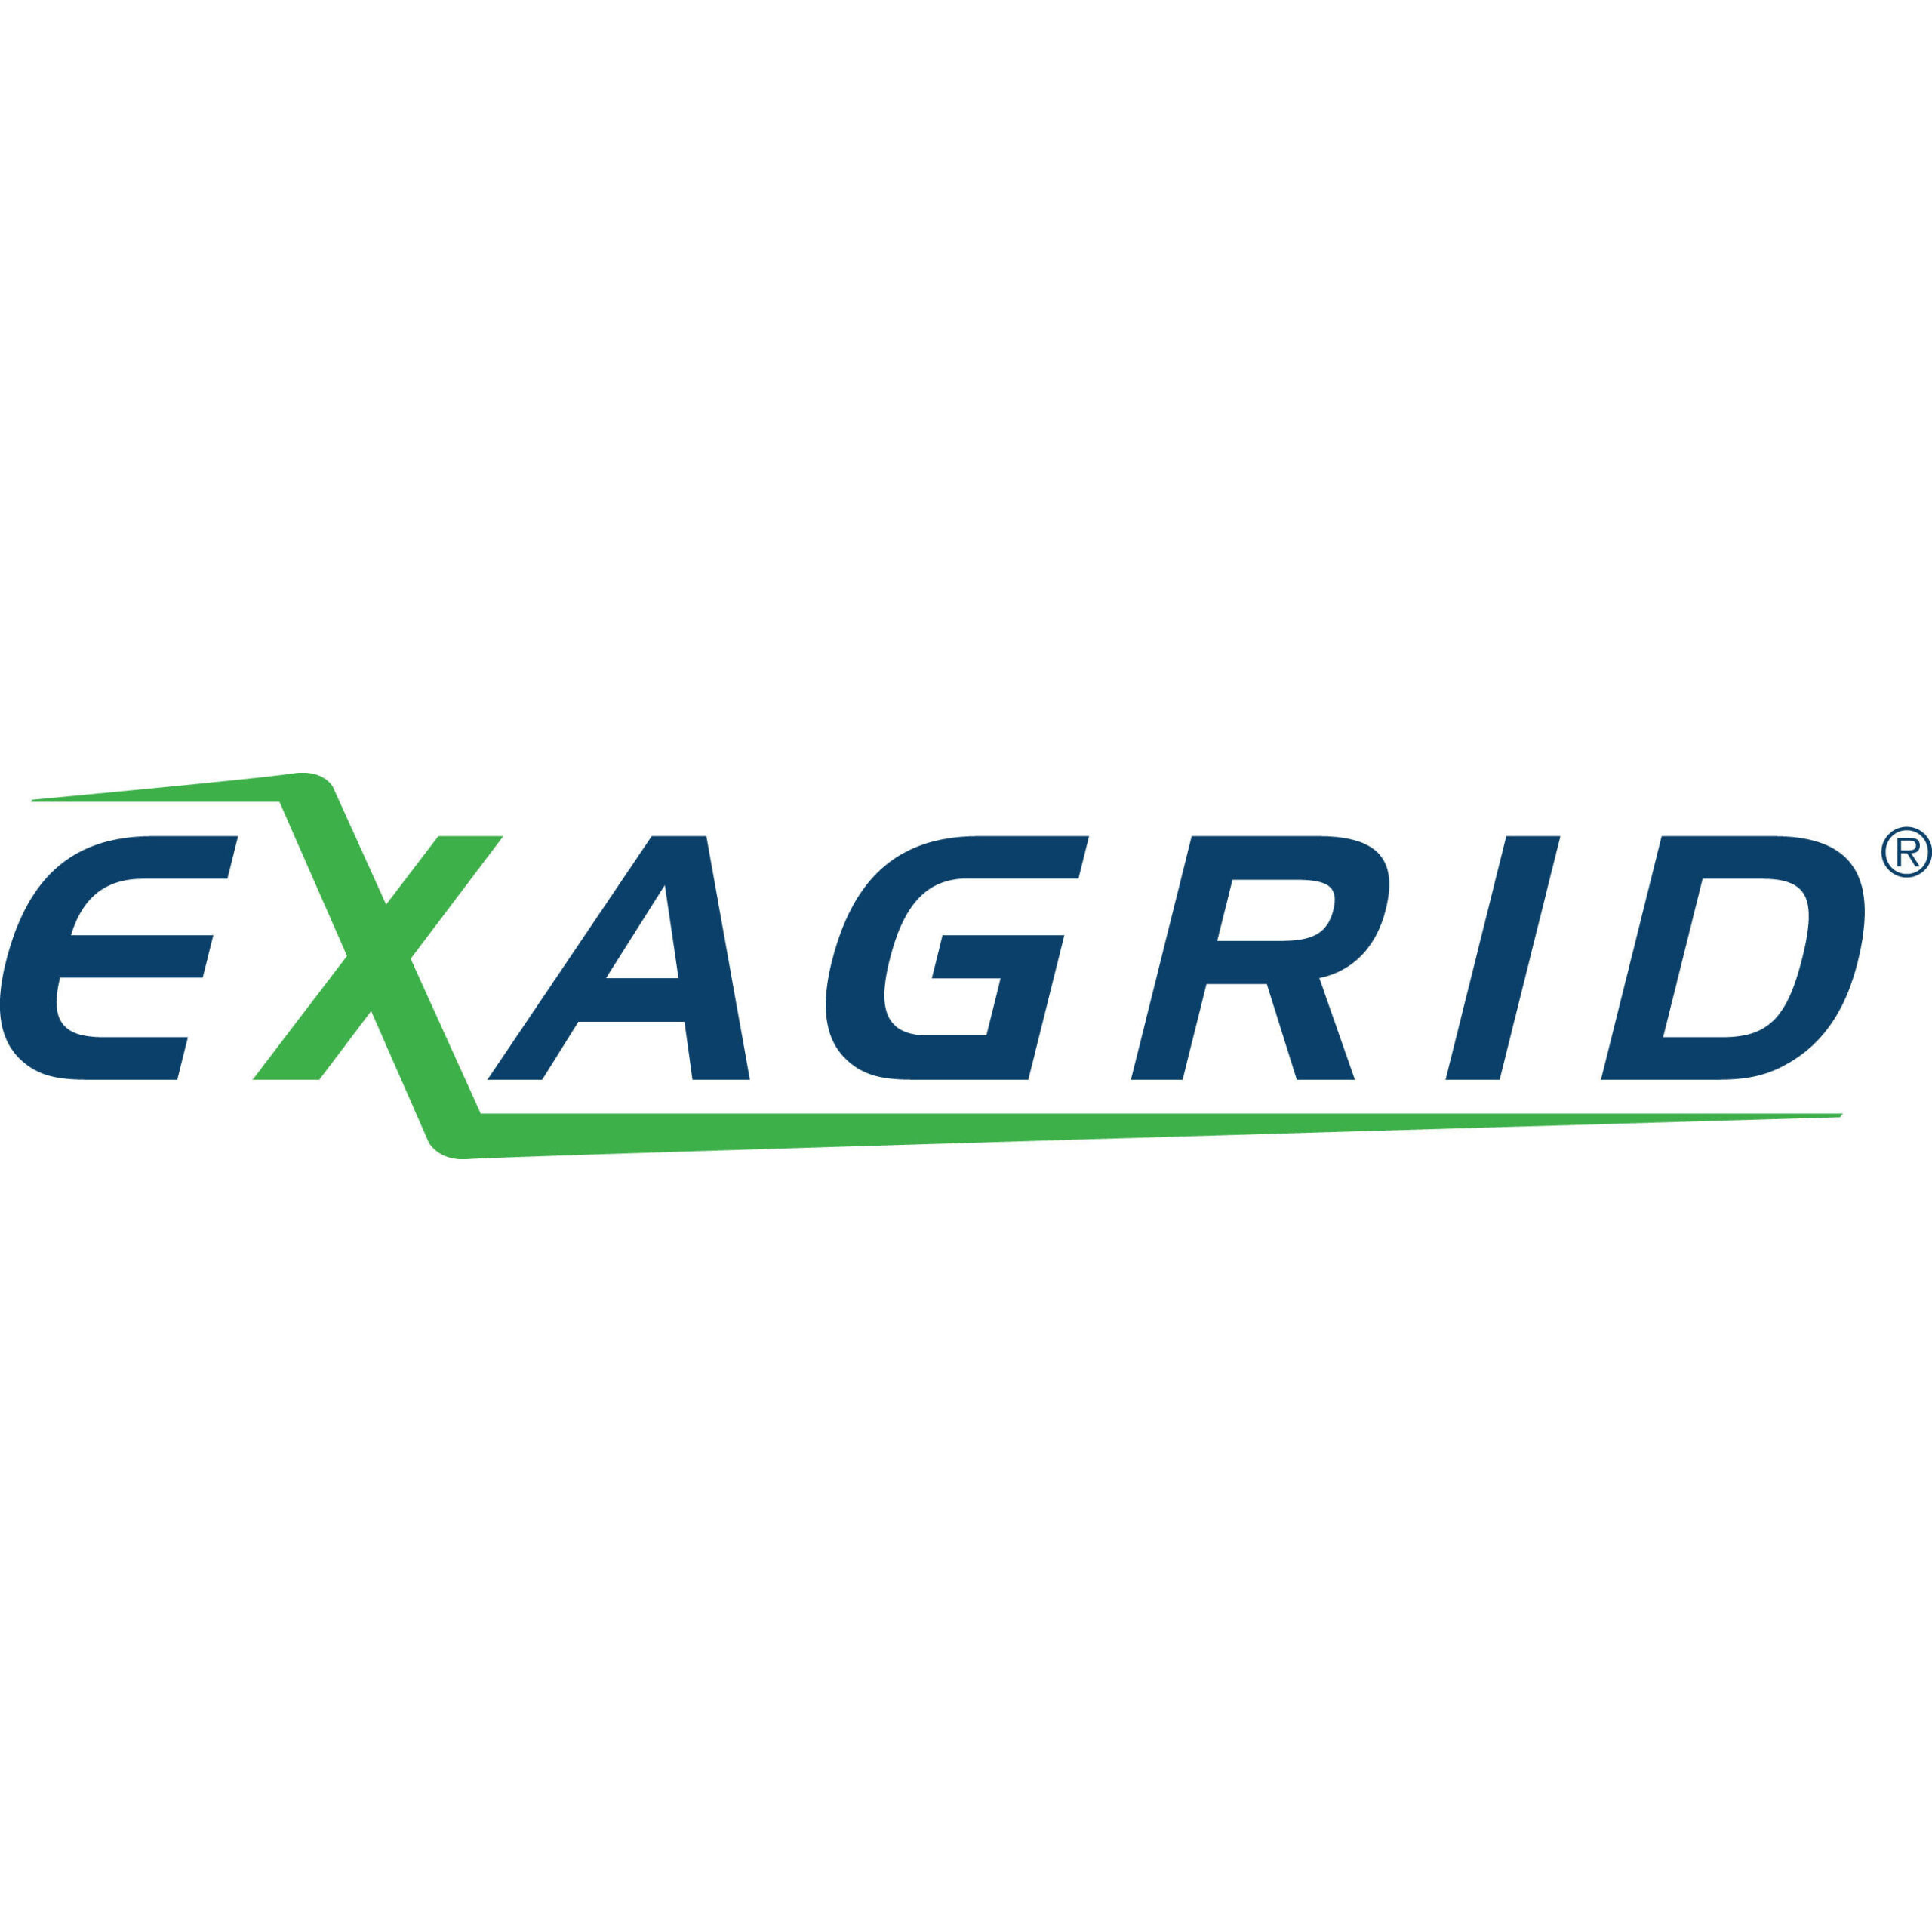 ExaGrid logo. (PRNewsFoto/ExaGrid)